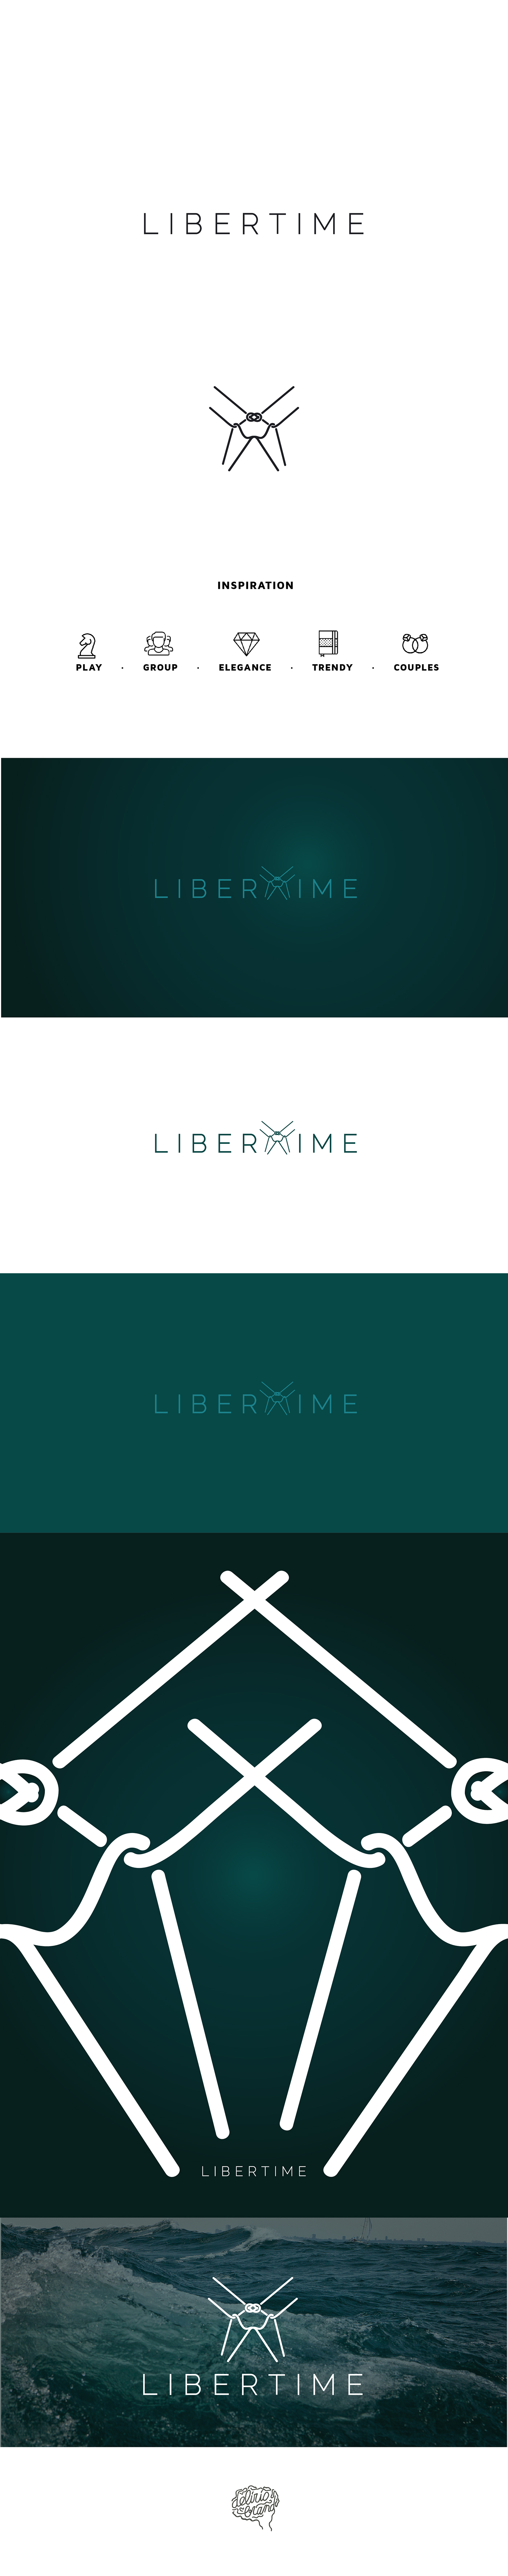 libertime logo branding  corporative imagen